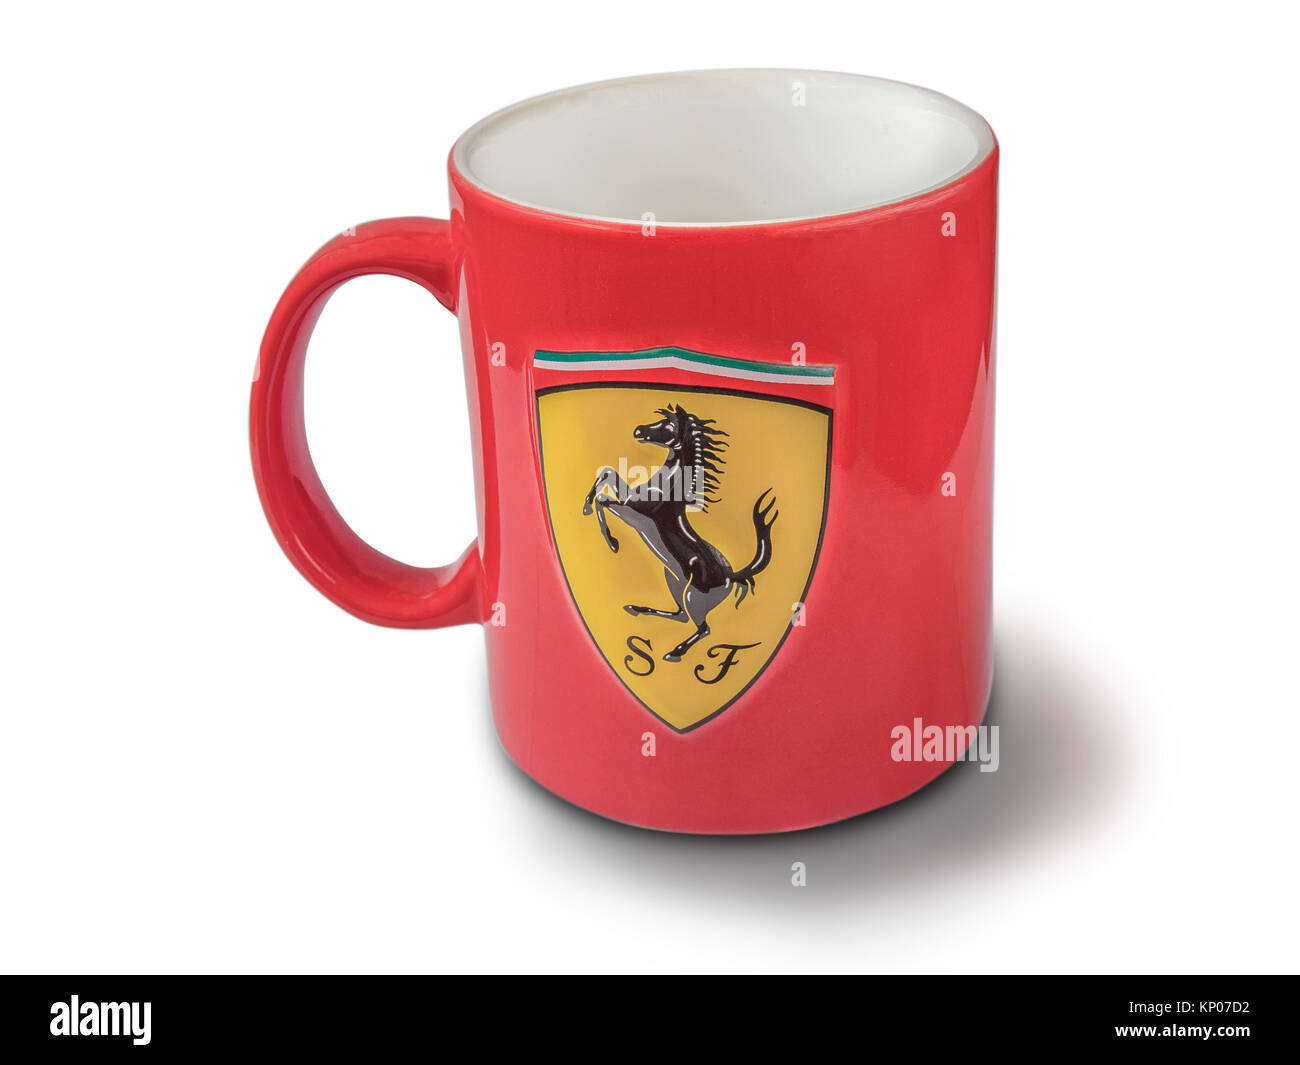 Scuderia Ferrari souvenir mug. Tea and Coffee mugs are popular collectible souvenirs. Stock Photo